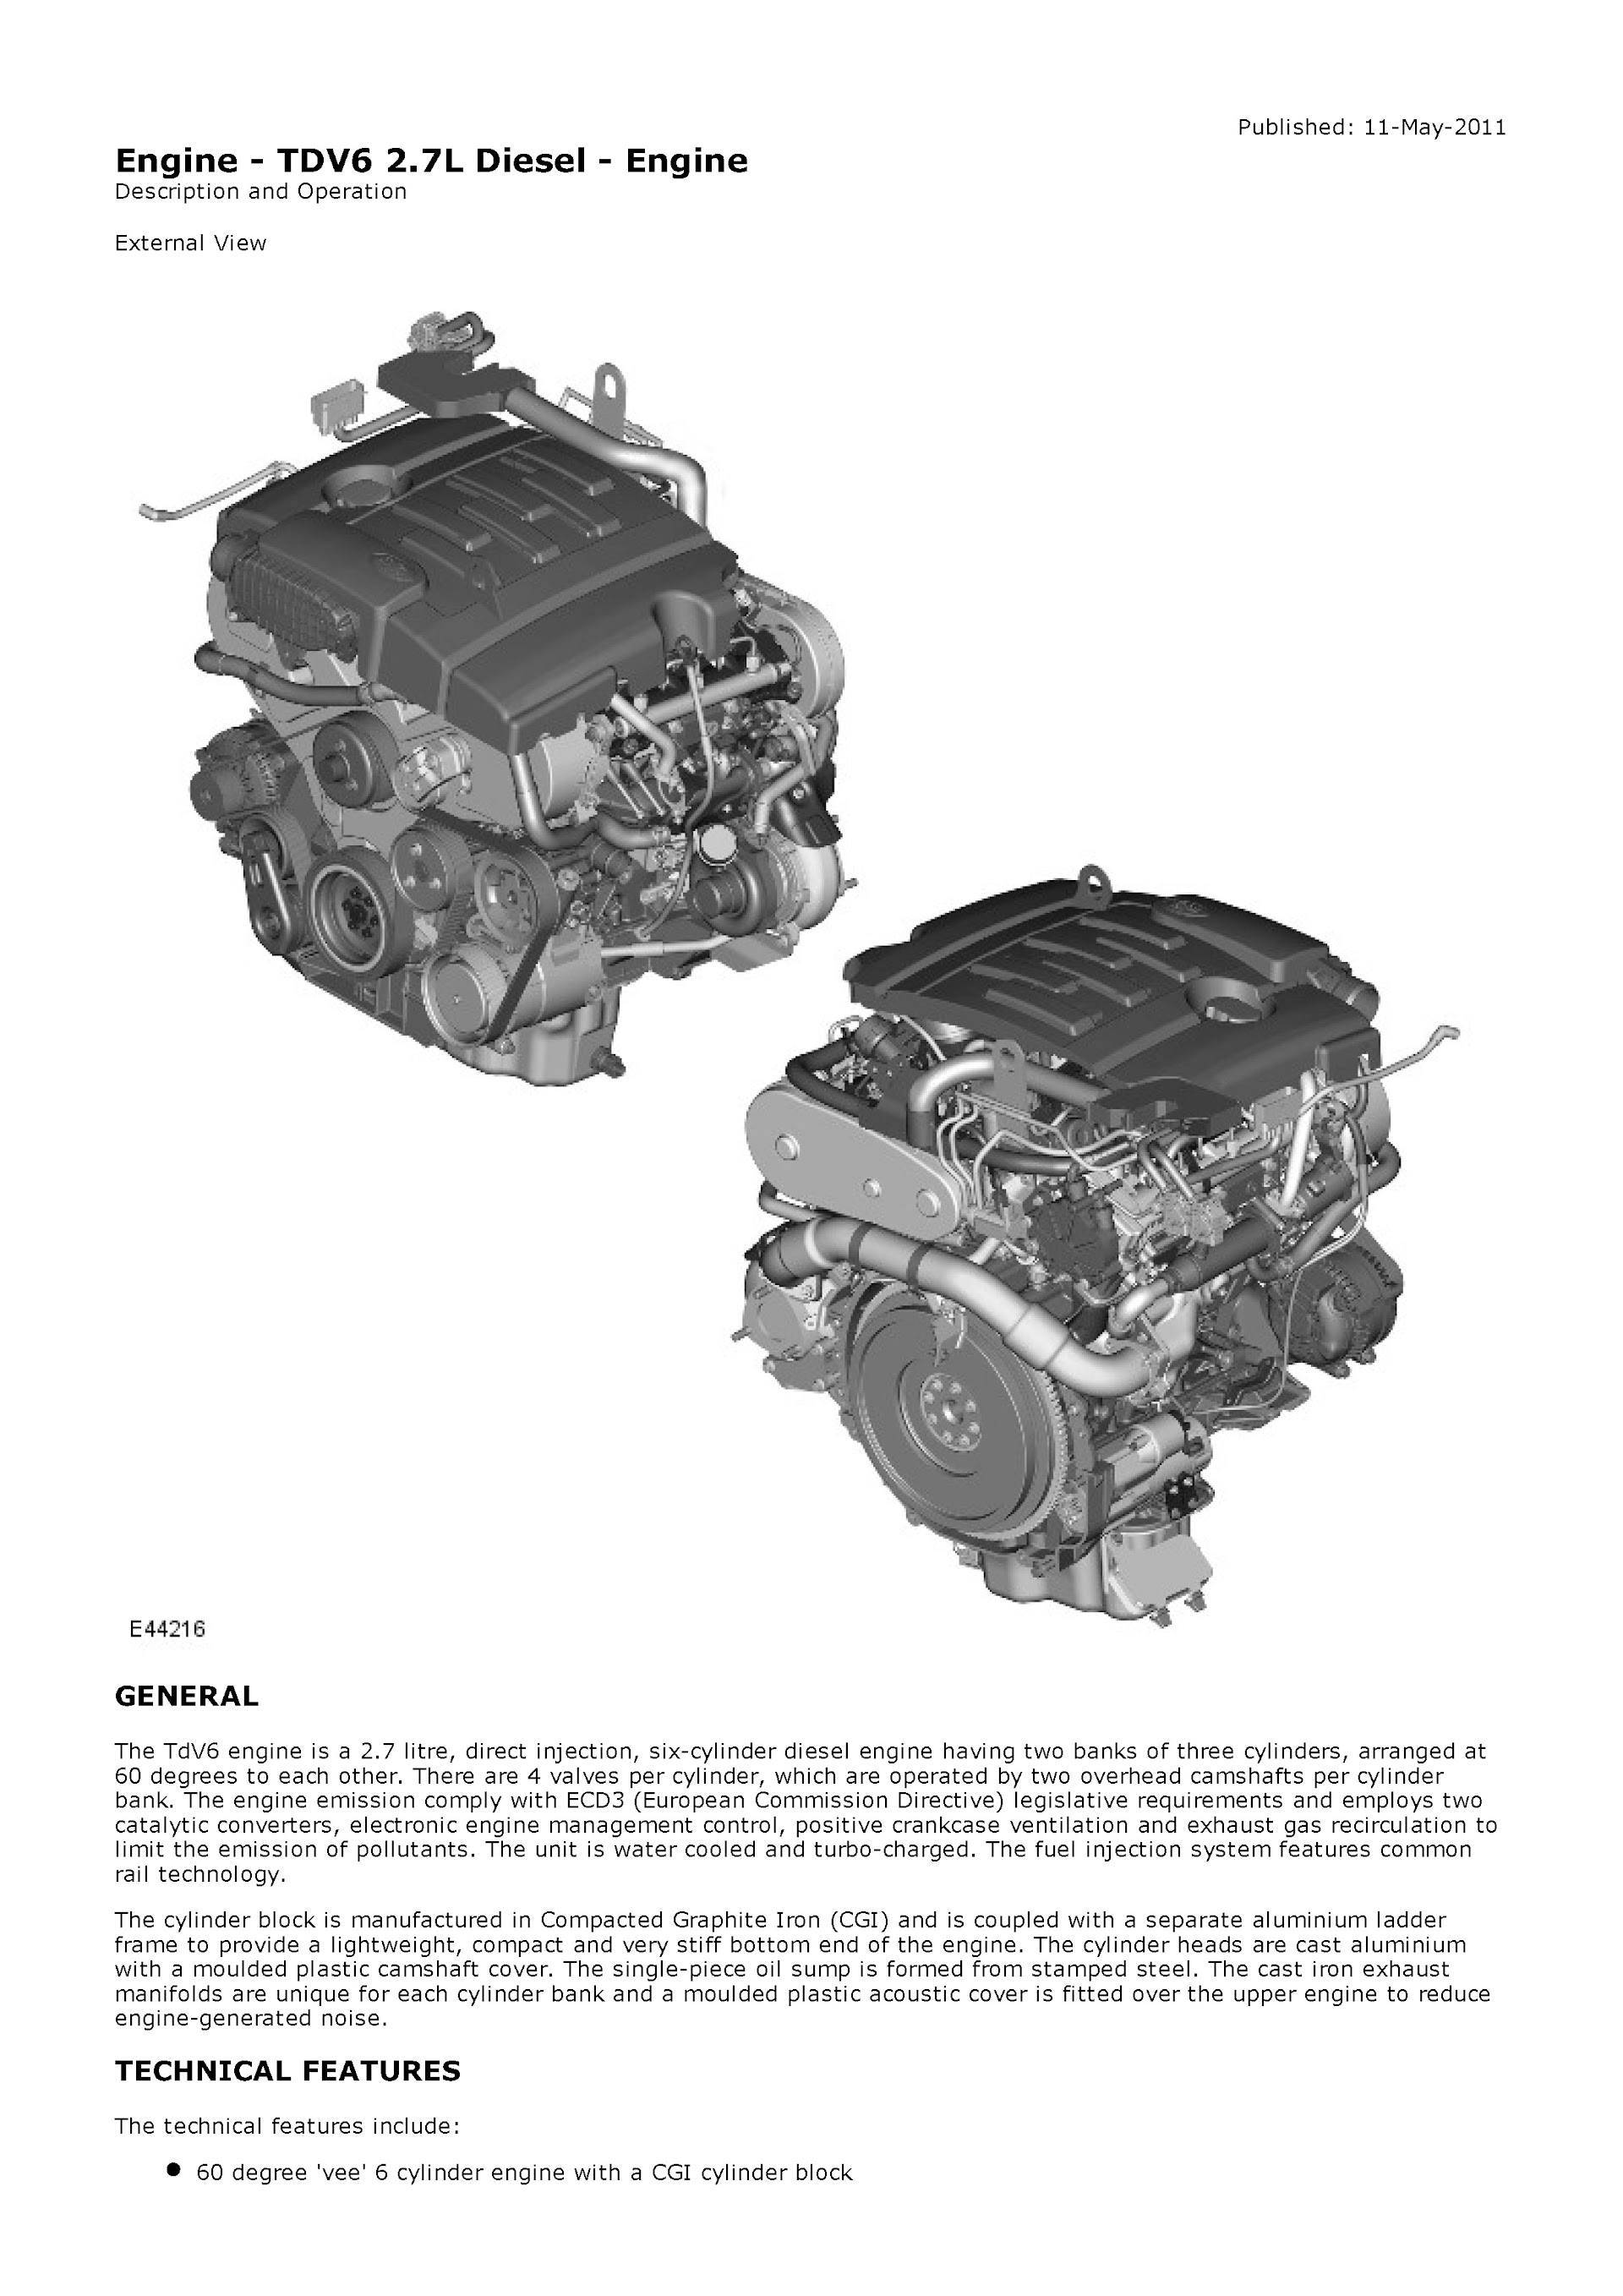 2009-2011 Land Rover Discovery 4 Repair Manual, Engine TDV6 2.7L Diesel